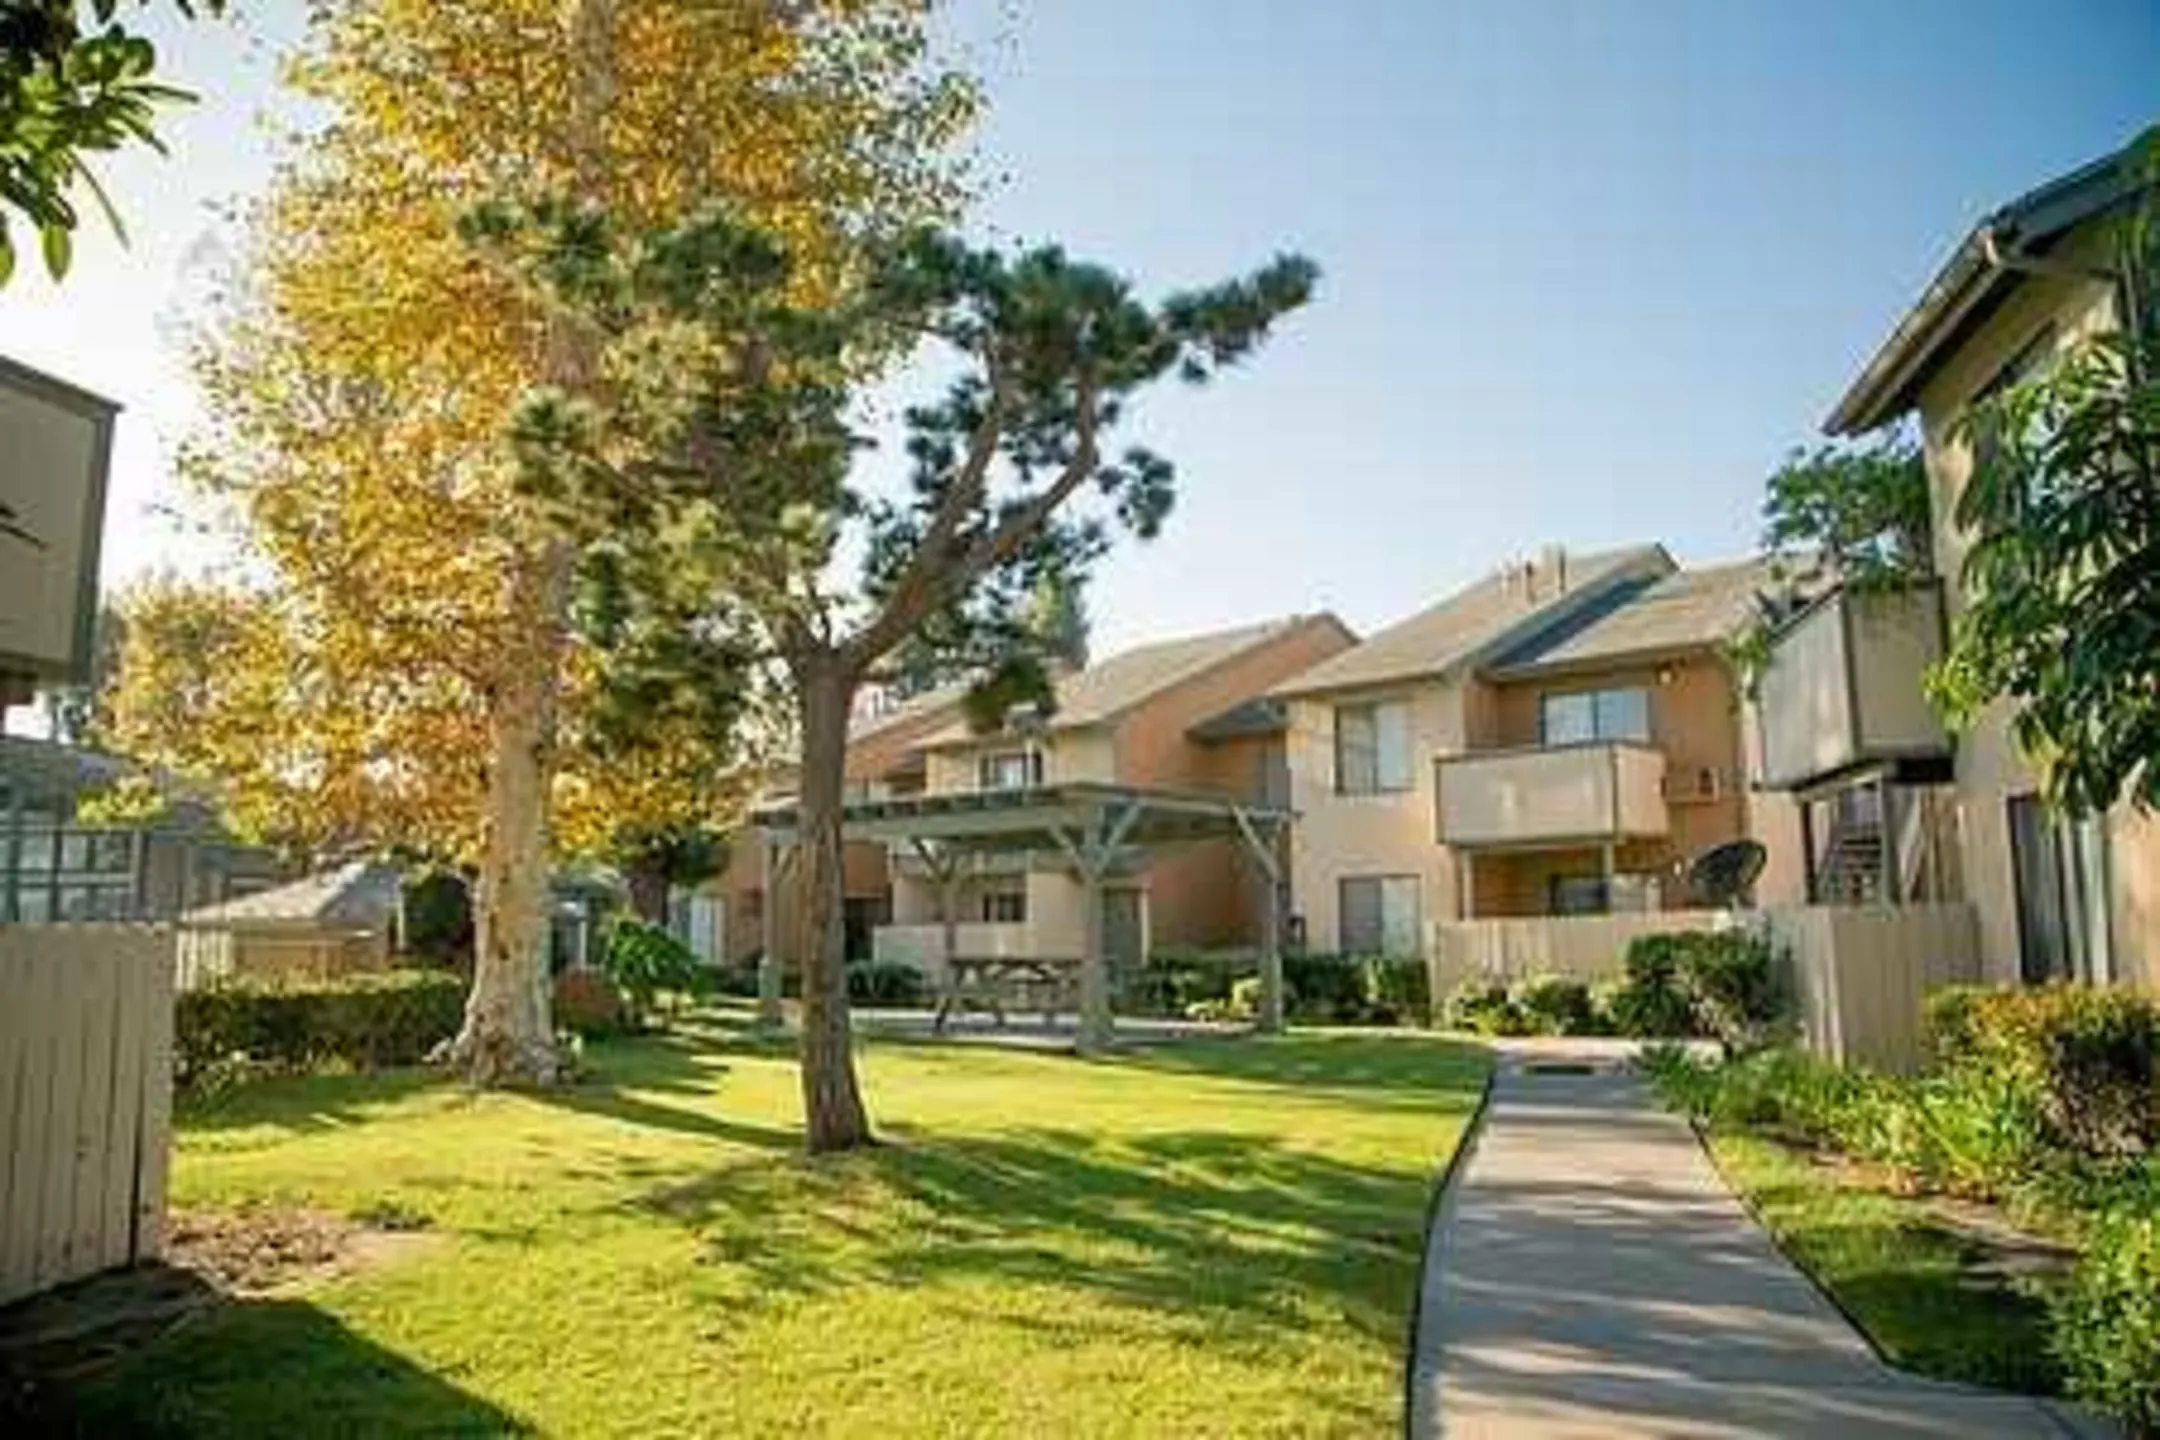 Landscaping - Mile Square Apartment Homes - Santa Ana, CA